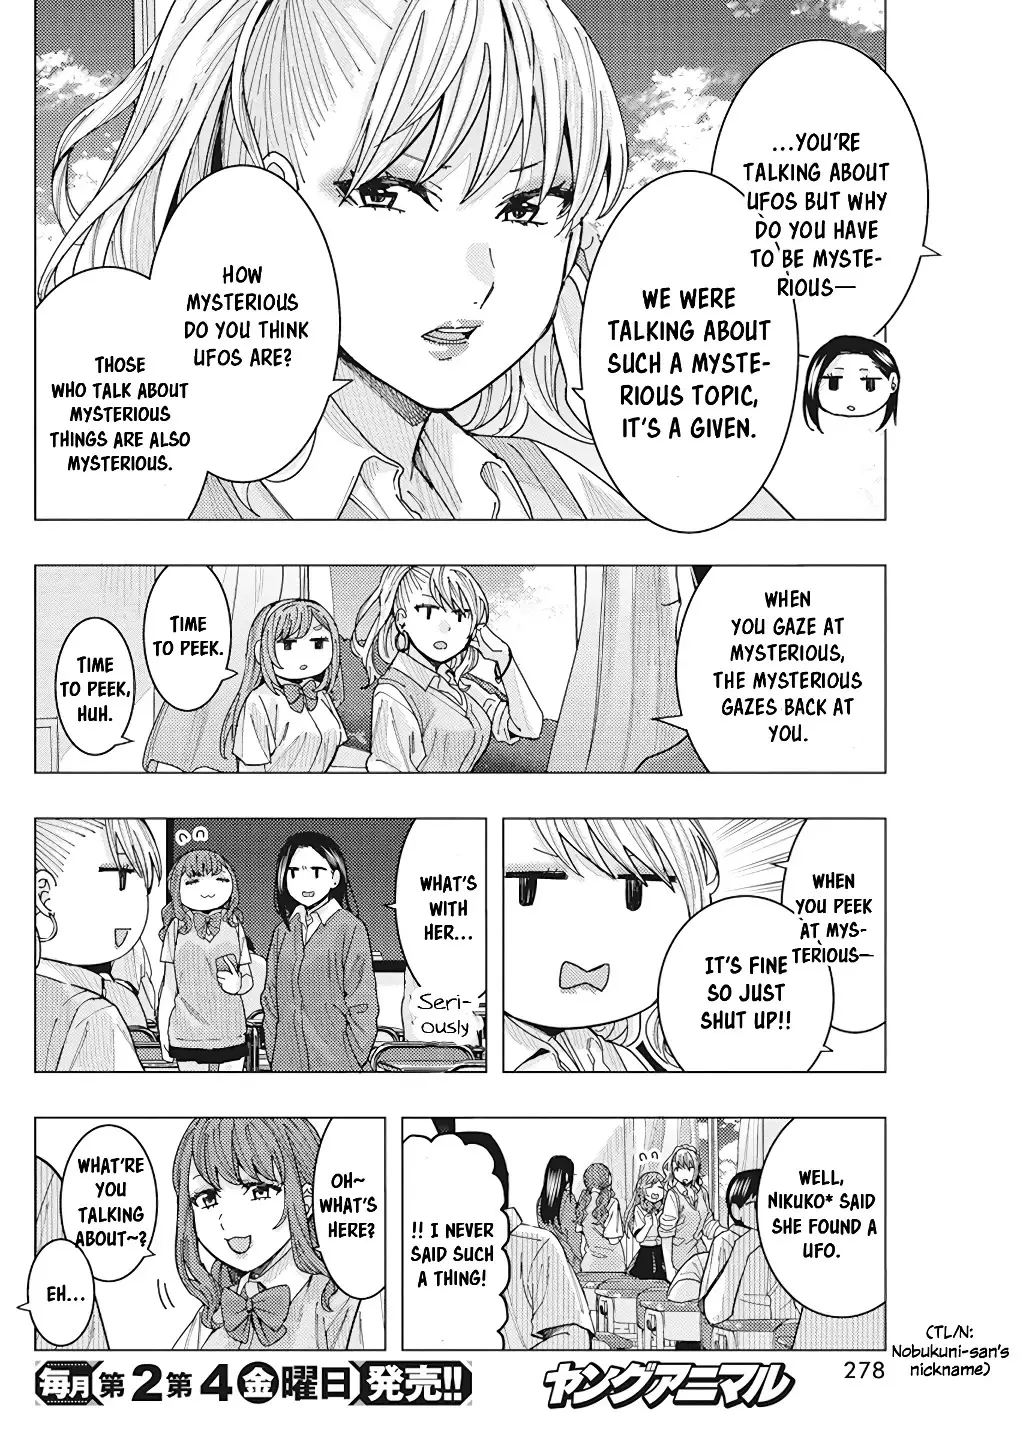 "nobukuni-San" Does She Like Me? - 17 page 11-25f5cb96